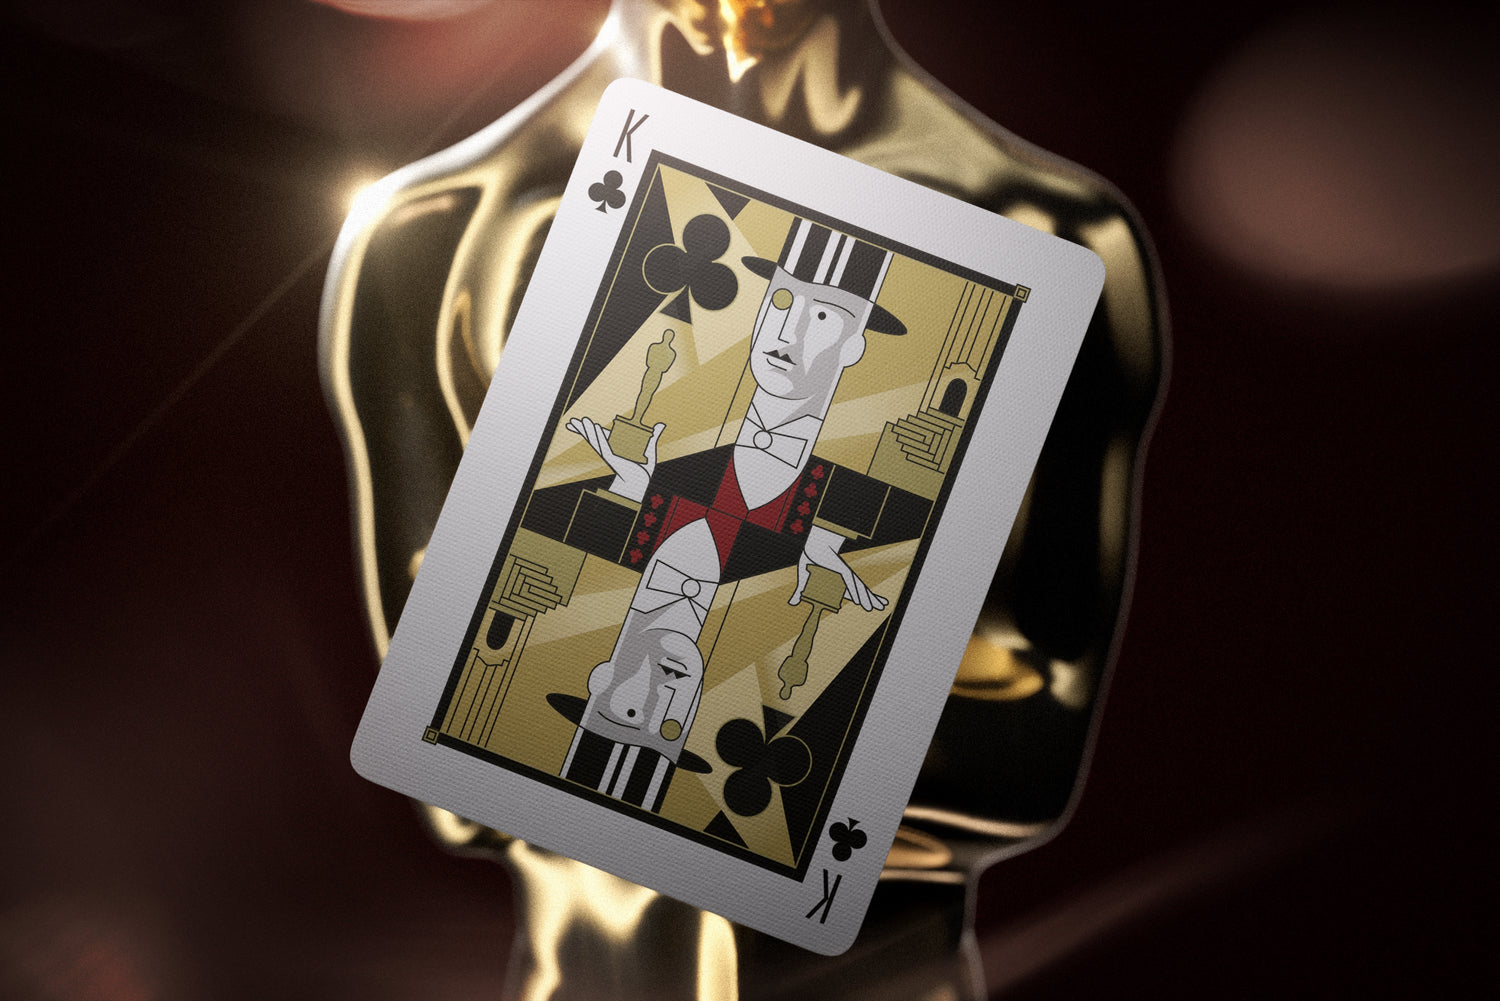 Oscars Academy Awards Playing Cards